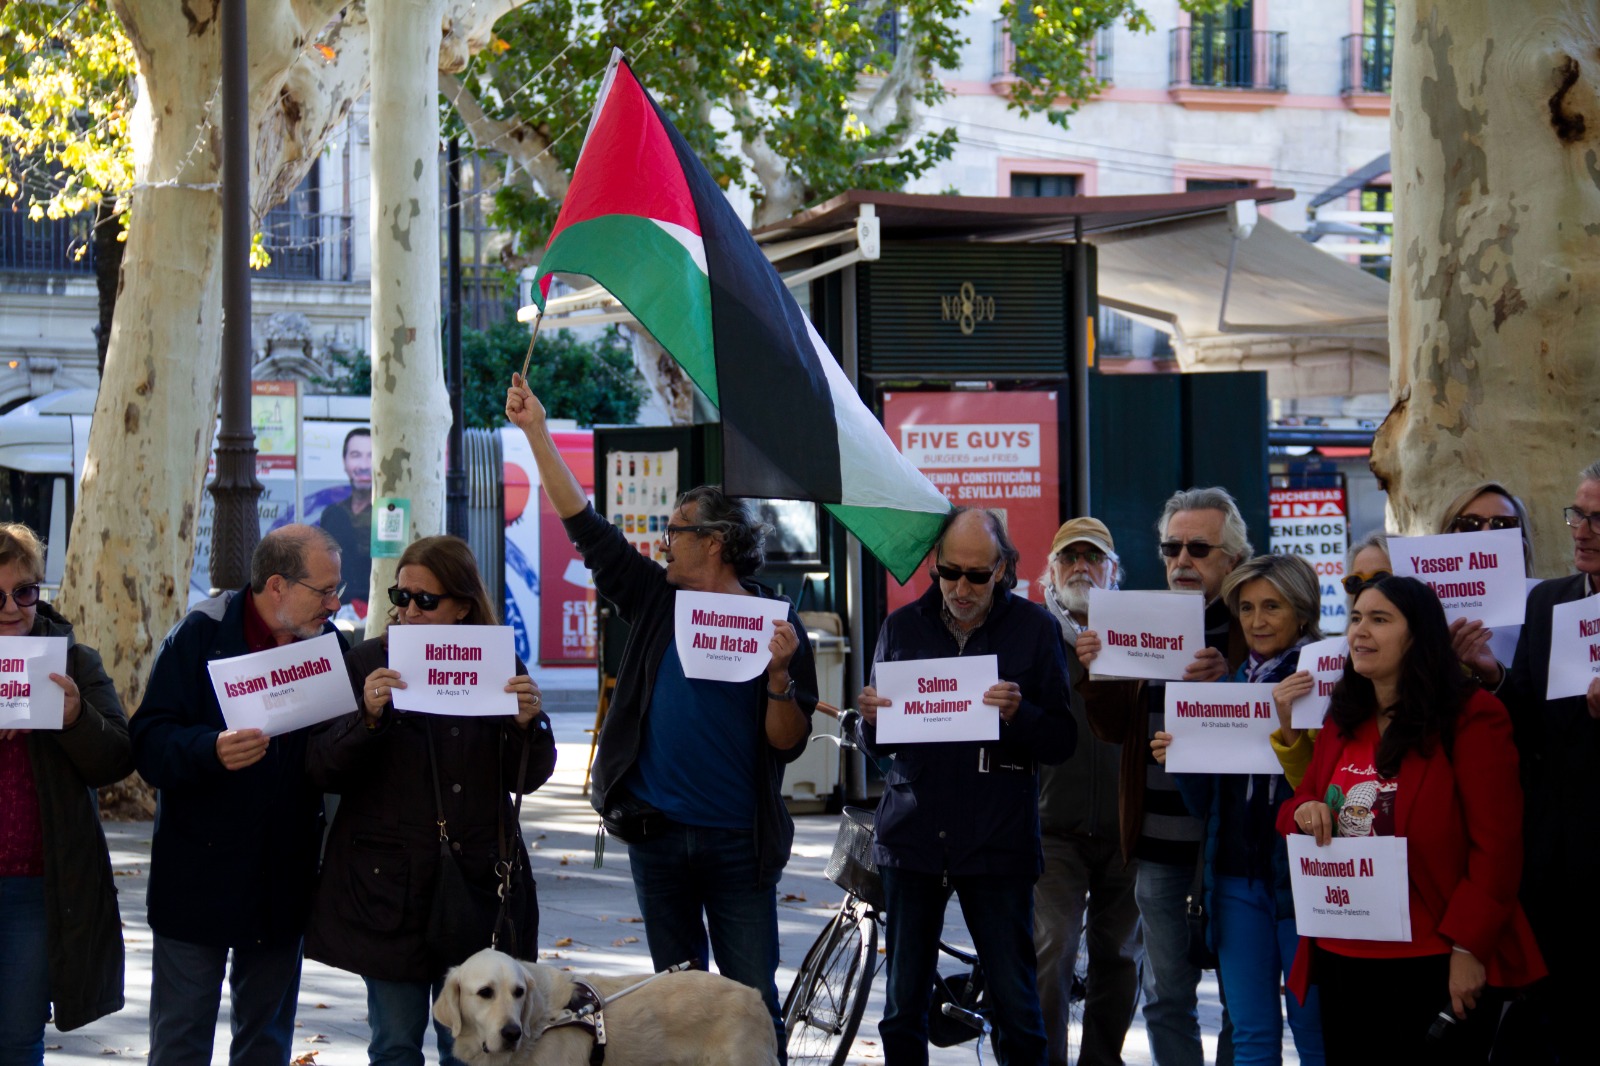 PERIODISTAS ANDALUCES DENUNCIAN LOS ATAQUES ISRAELÍES A LA PRENSA PALESTINA EN GAZA